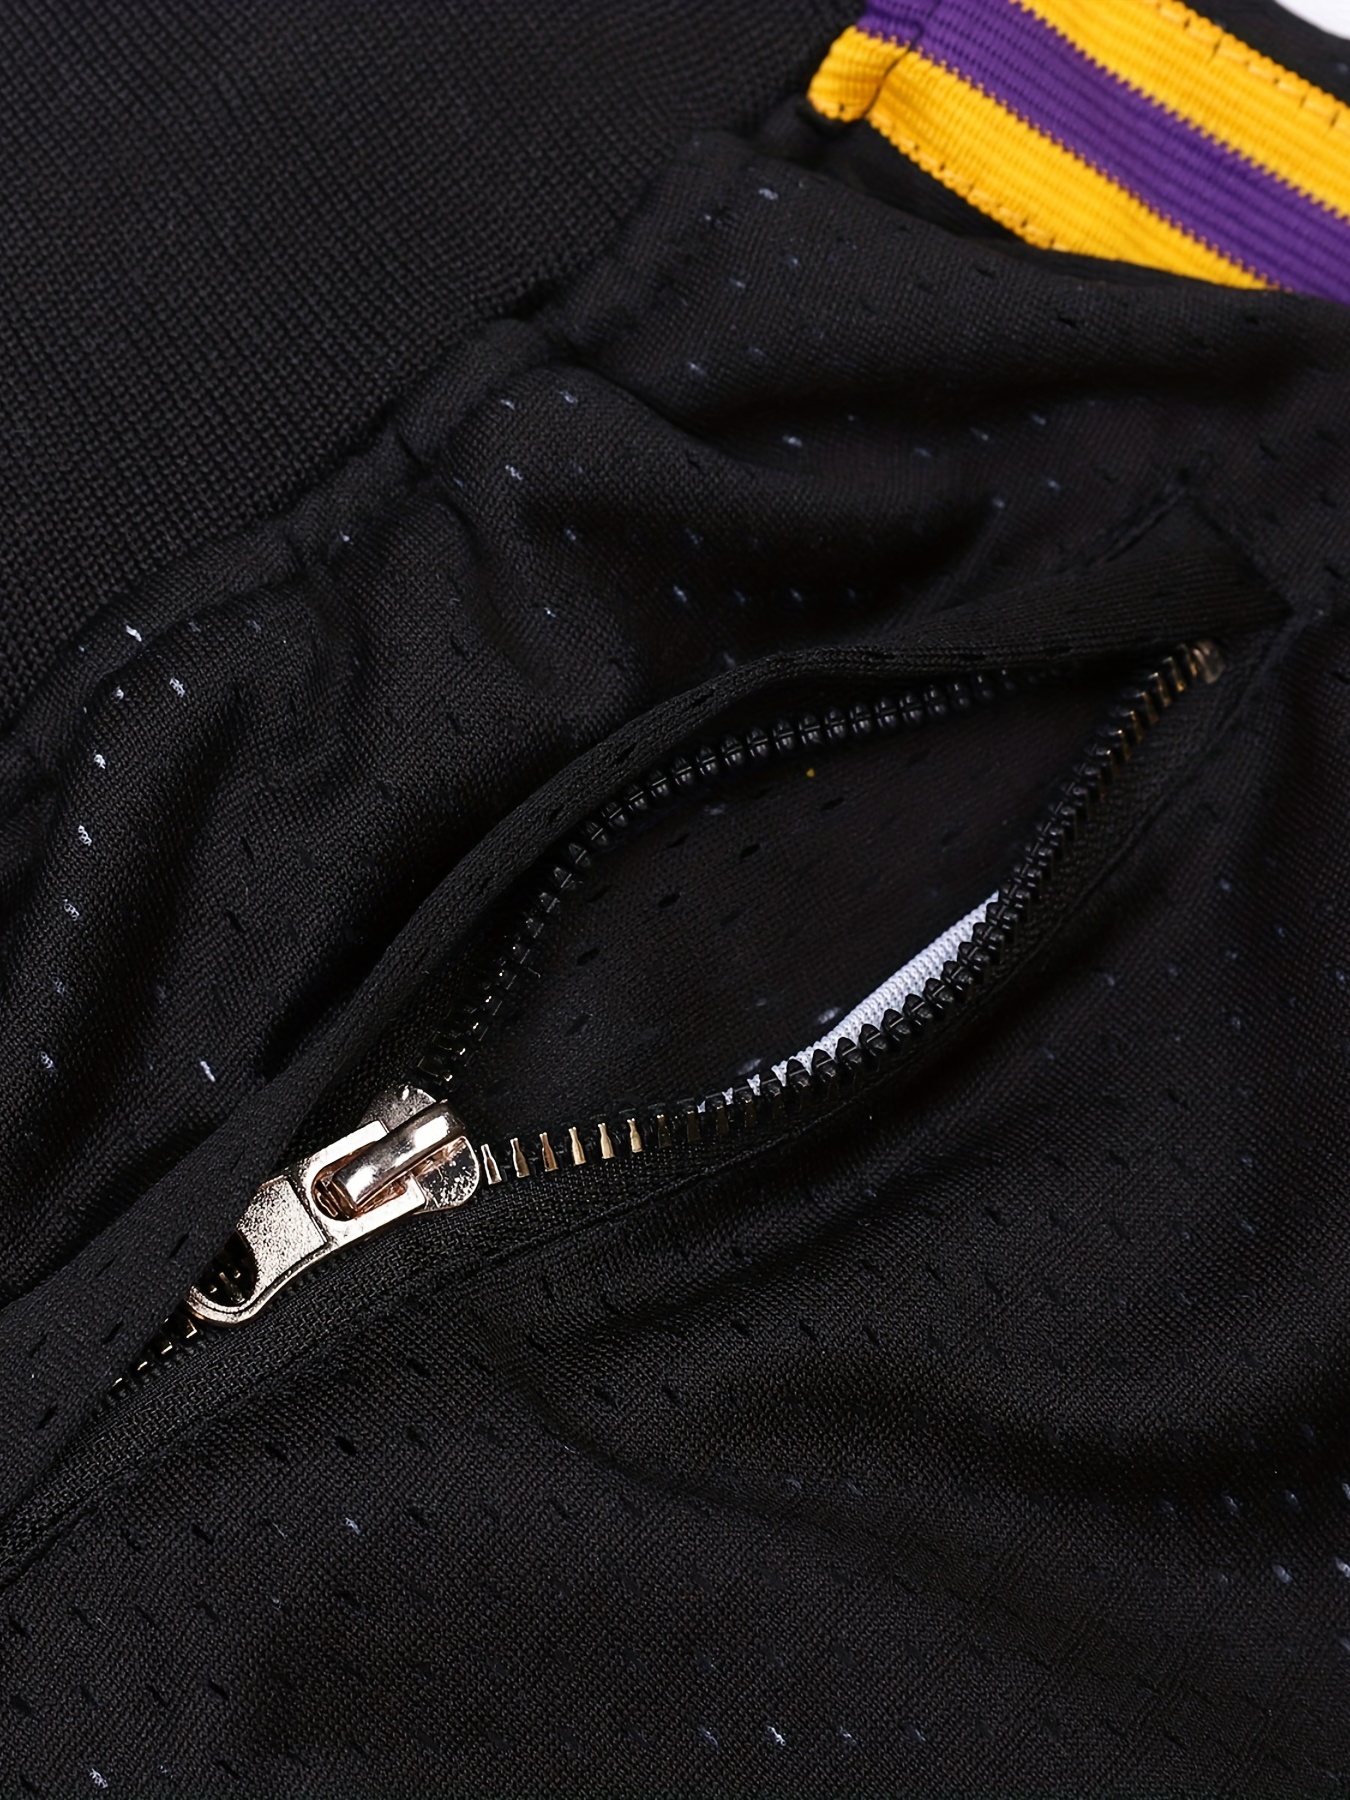 Buy ROMRWJ Men's Mamba Embroidery 8-24 Retro Basketball Shorts with Pockets  Yellow at